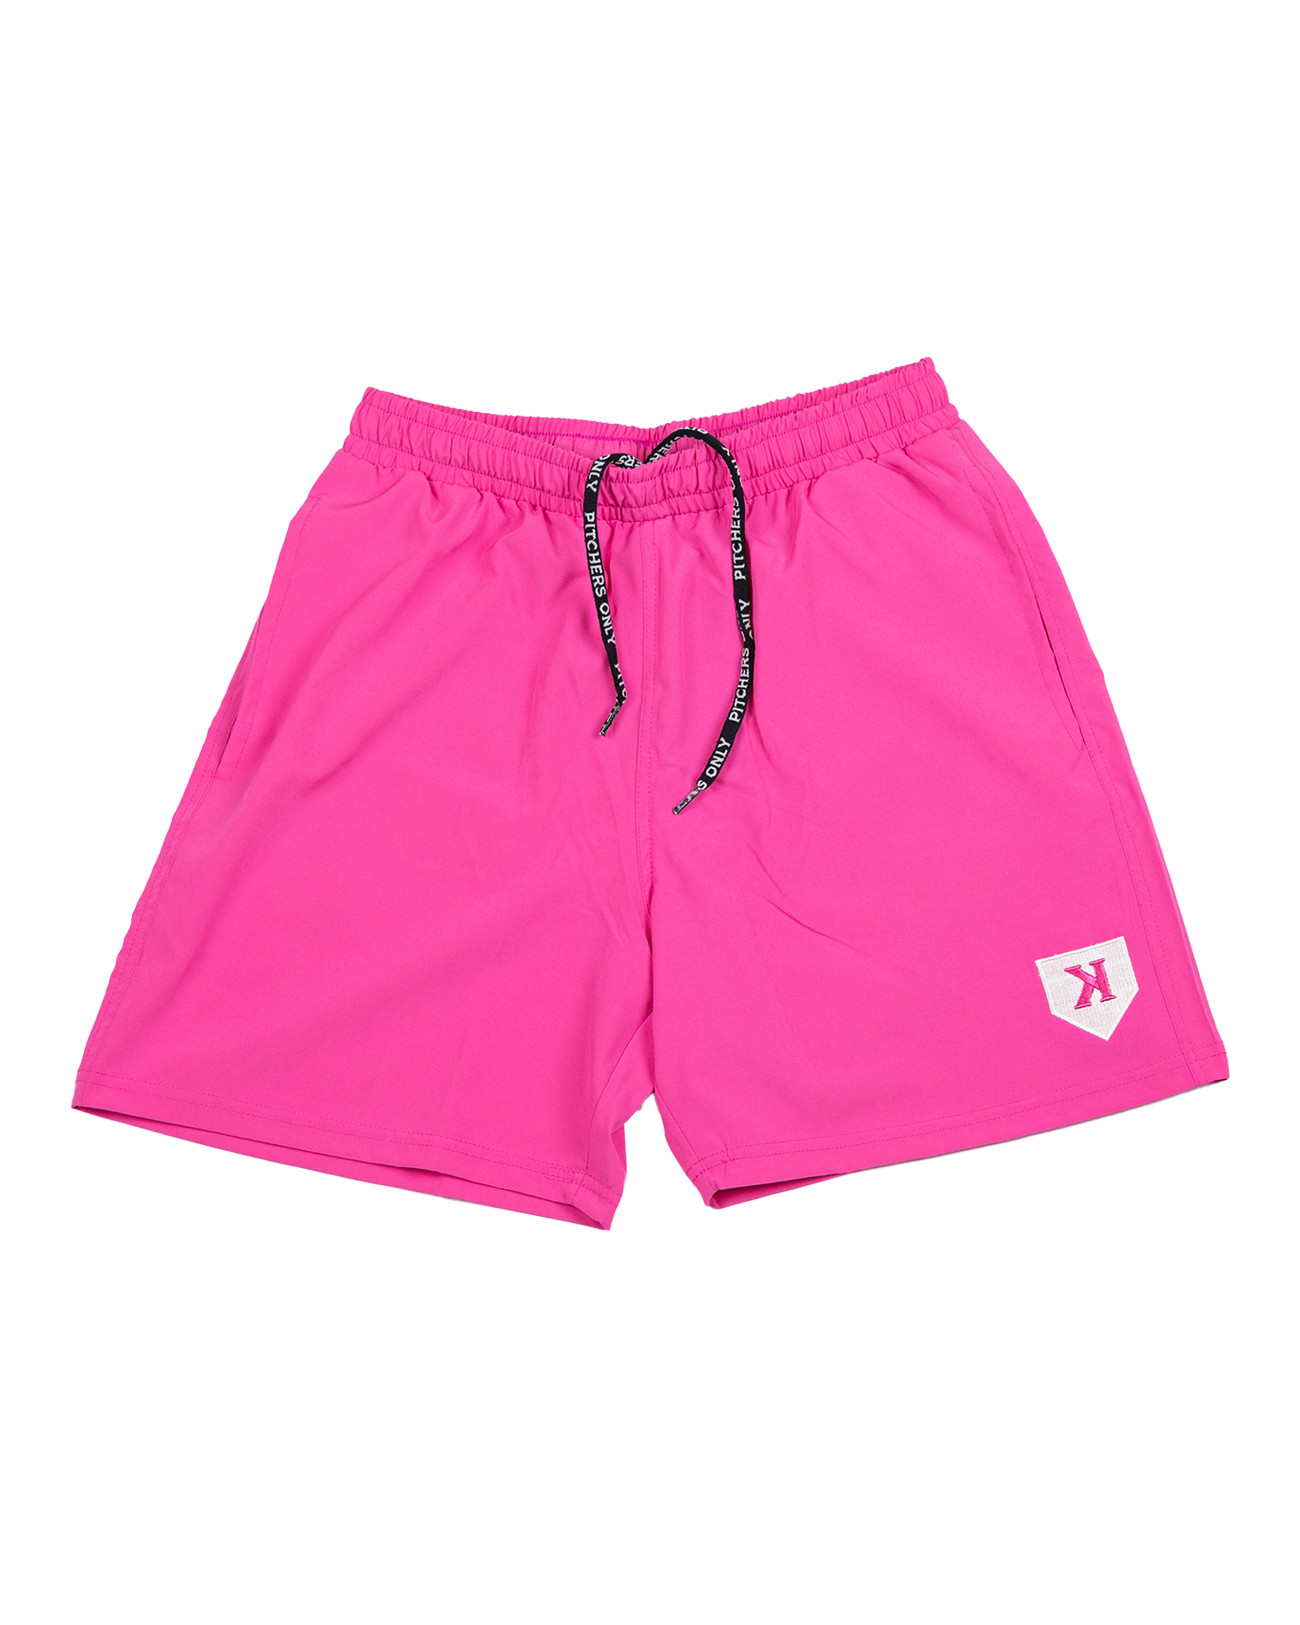 Pink Youth Training Shorts